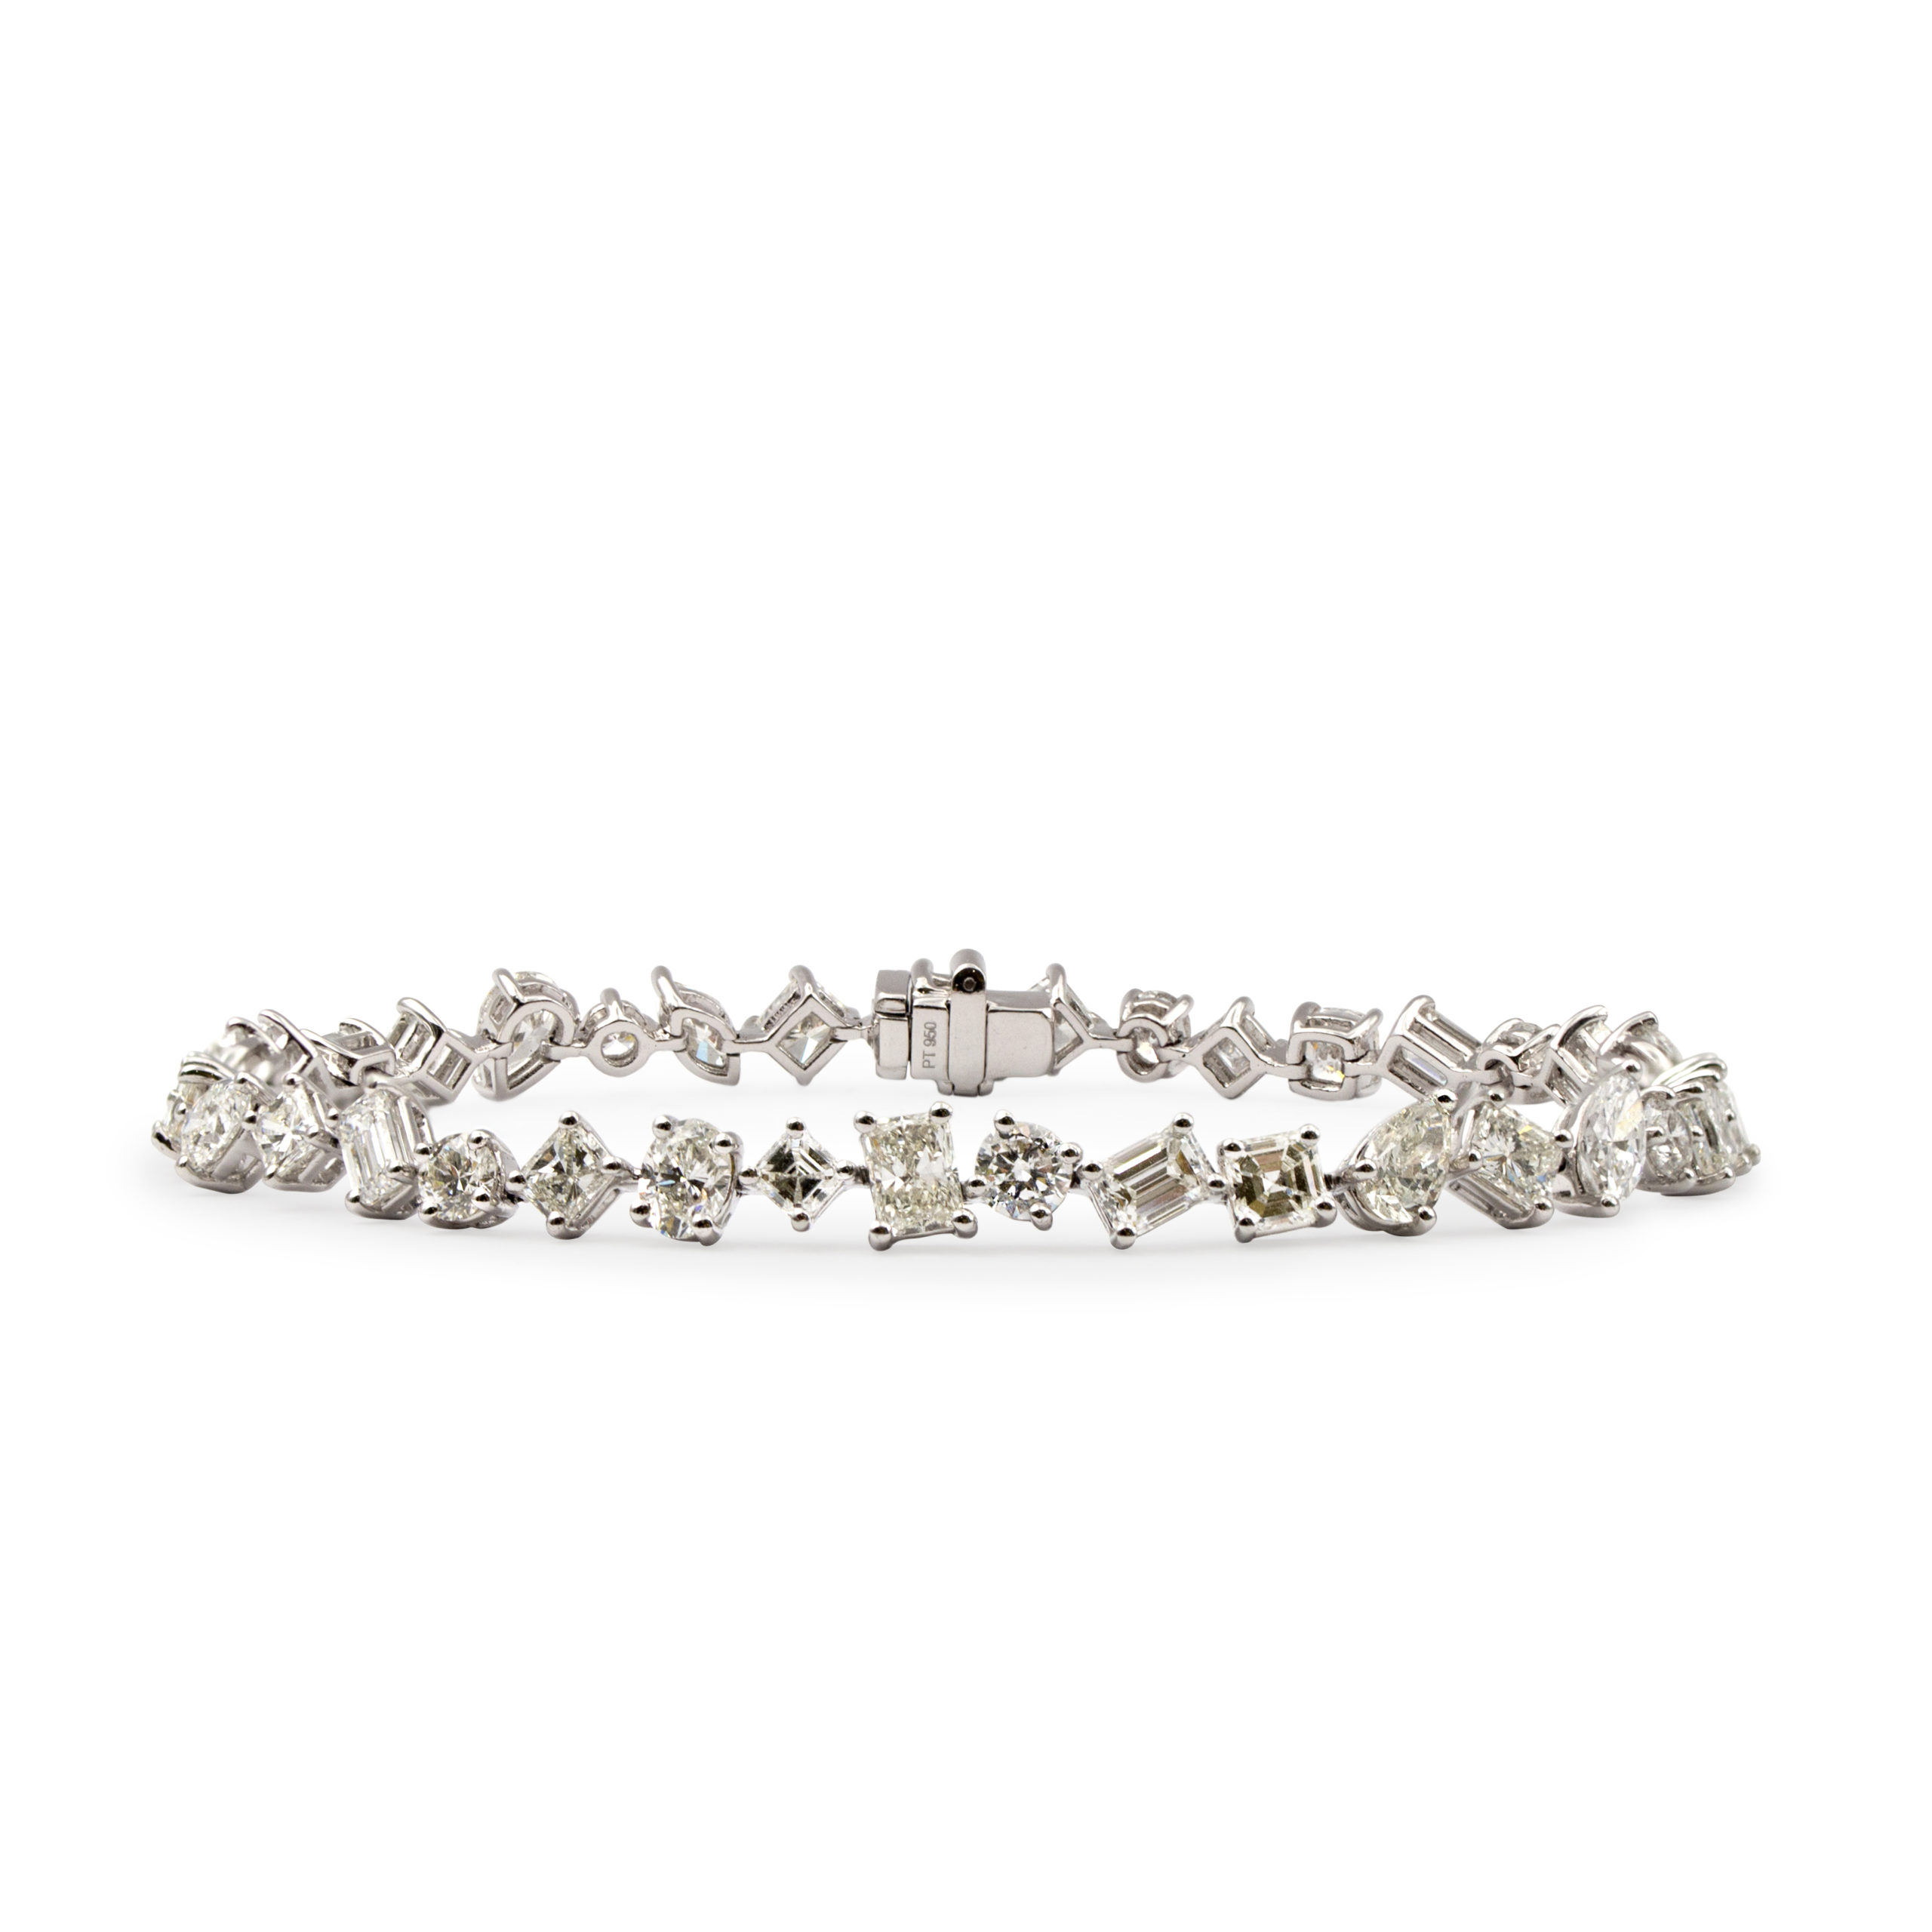 Multi-Shaped Diamond Tennis Bracelet (10.10ct), Sandler's Diamonds & Time, Columbia SC